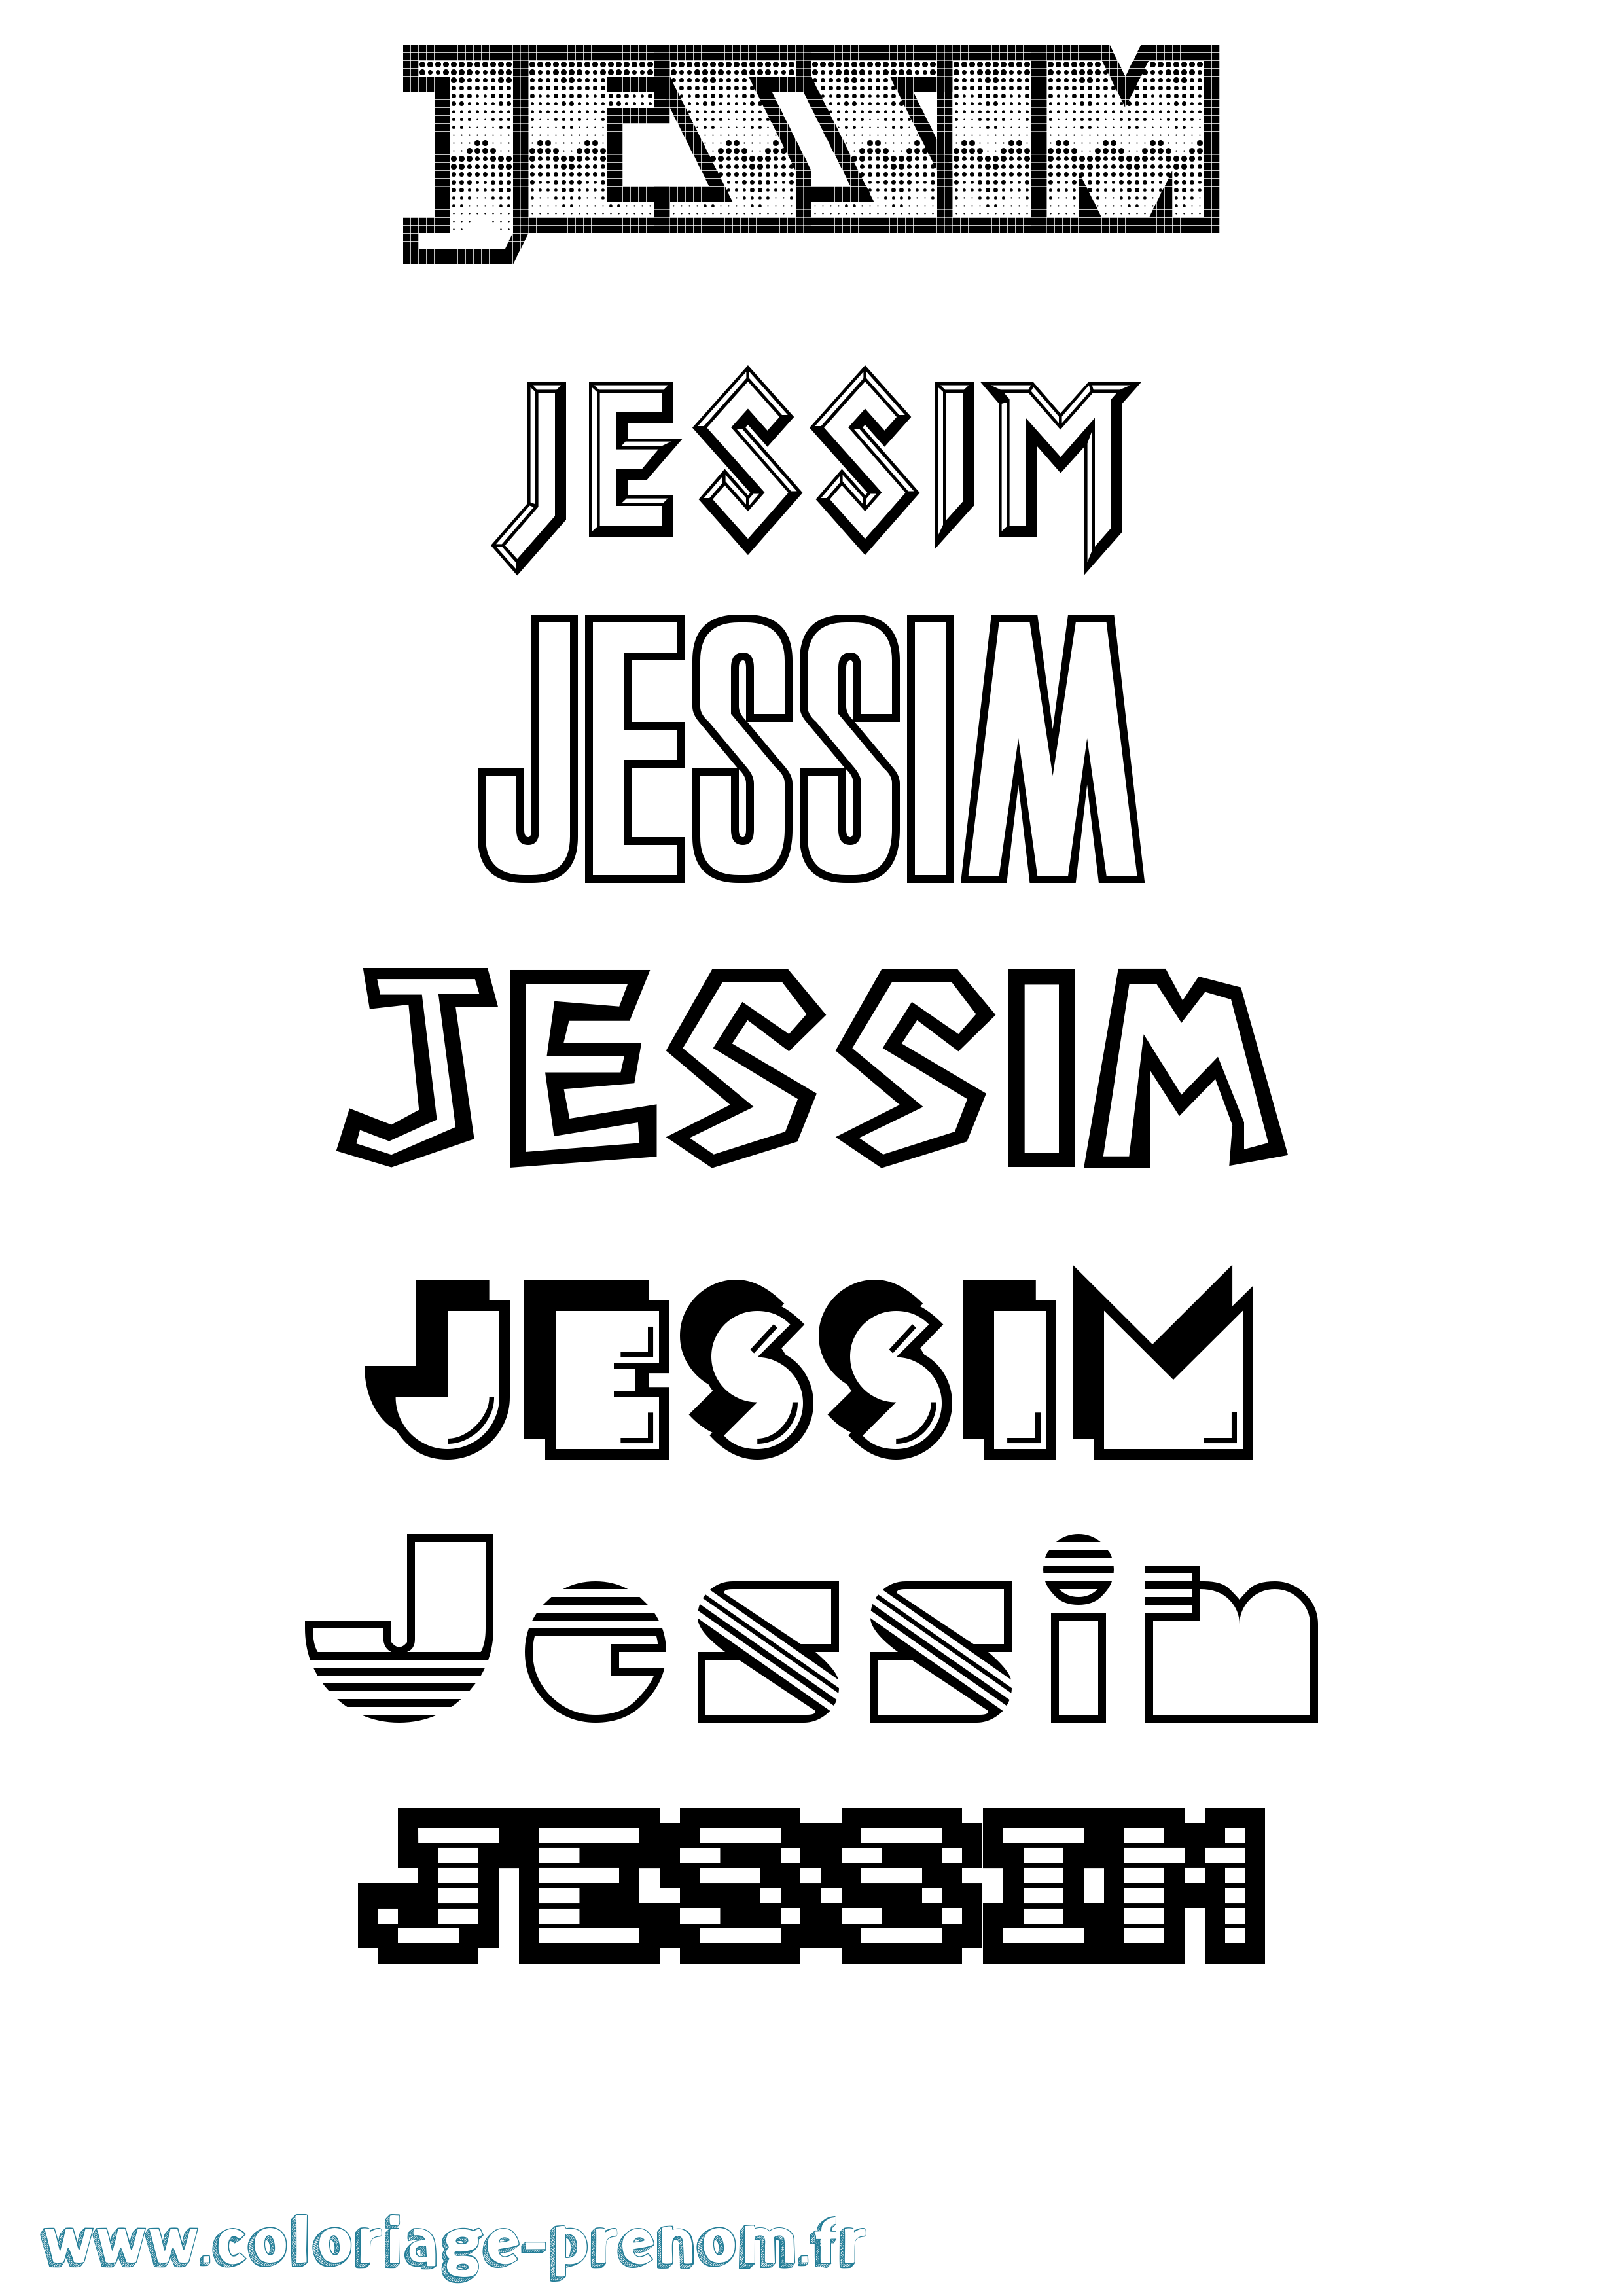 Coloriage prénom Jessim Jeux Vidéos